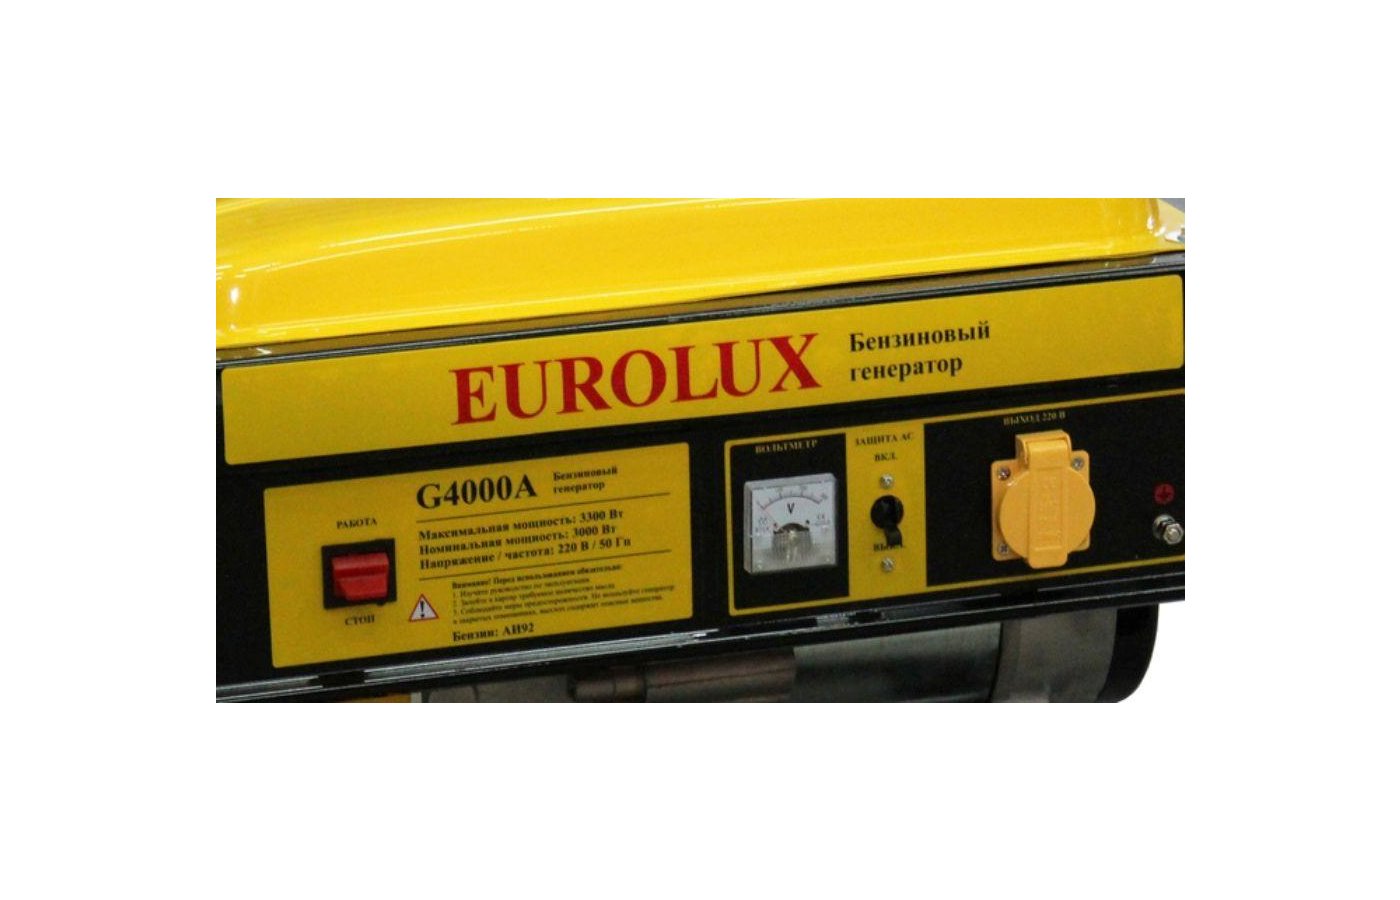 Eurolux g4000a. Бензогенератор Евролюкс g4000a. Генератор Eurolux g4000a. Бензиновый Генератор Eurolux g4000a, (3300 Вт). Электрогенератор Eurolux g3600d.